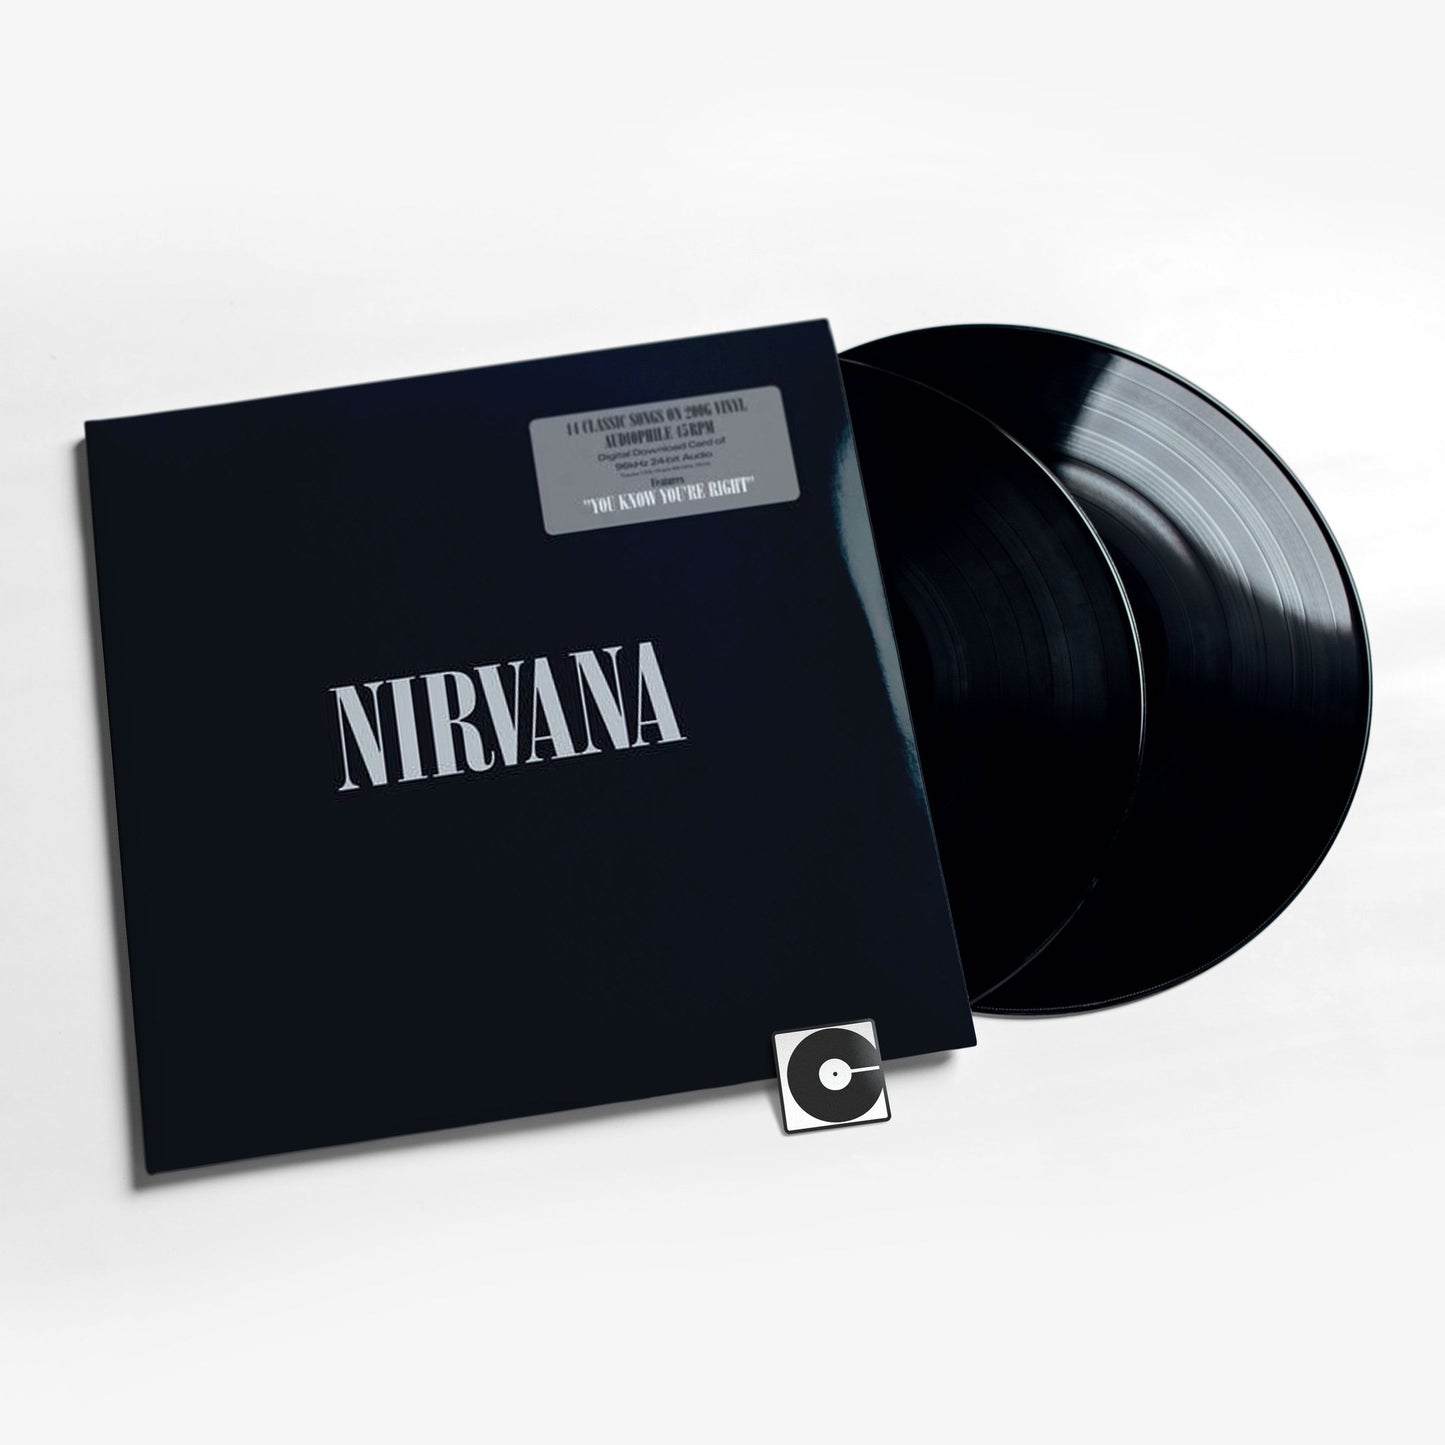 Nirvana - "Nirvana" 45 RPM